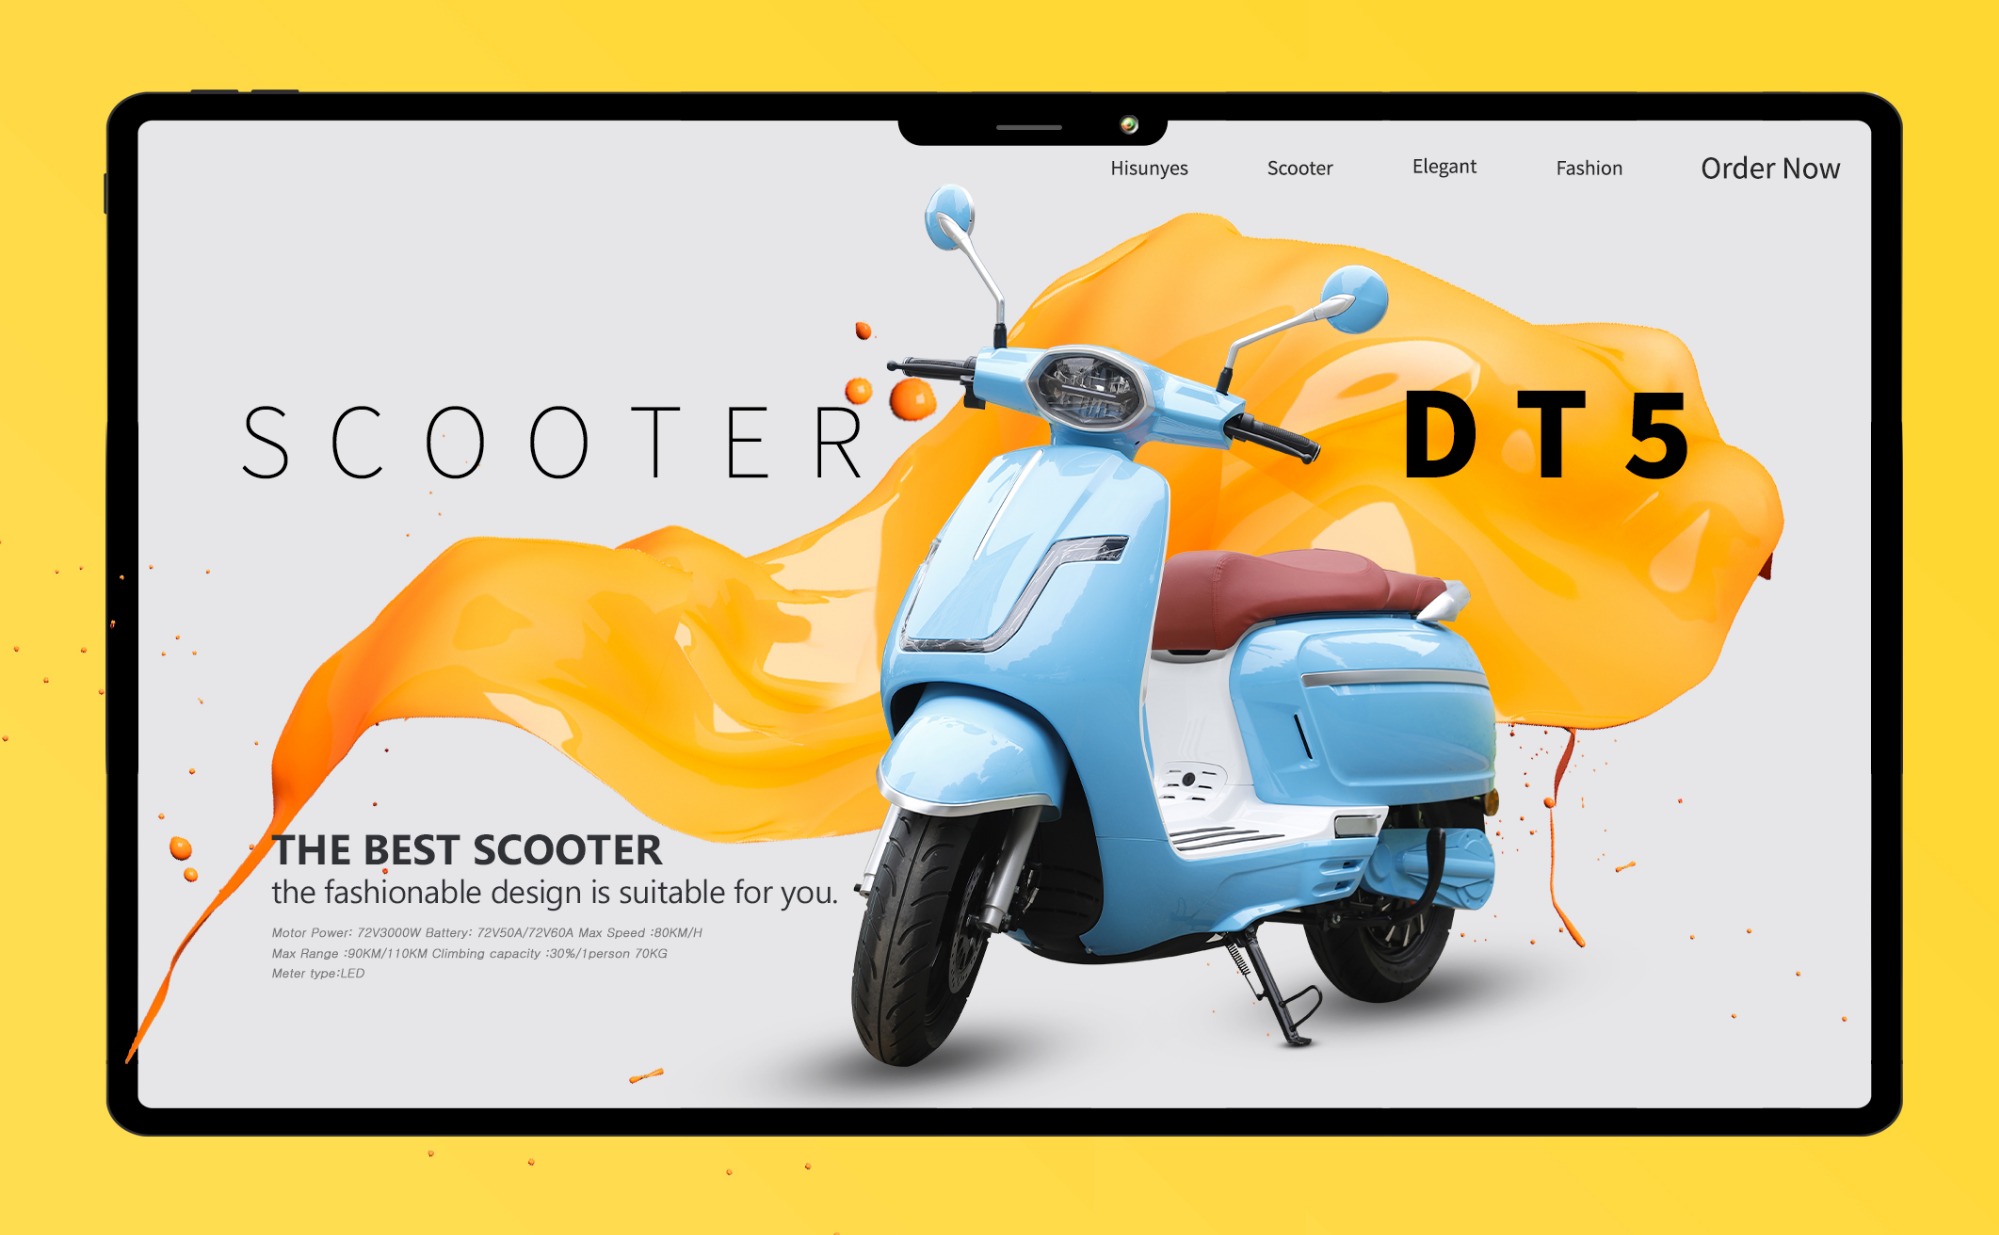 O 2023 novo scooter elétrico popular ciclomotor DT5